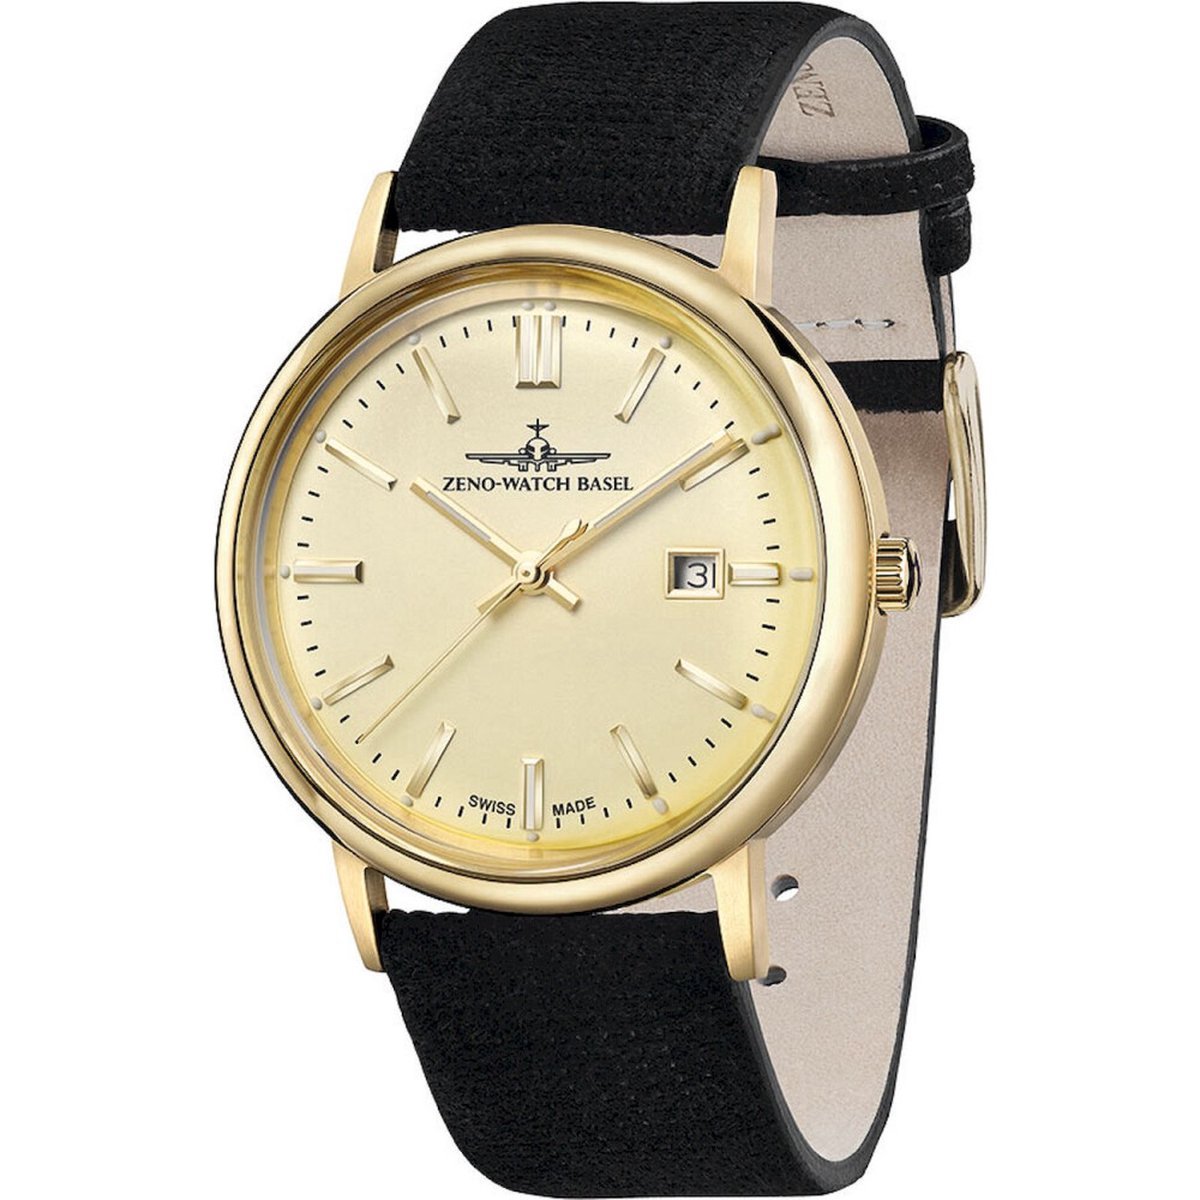 Zeno Watch Basel Herenhorloge 5177-515Q-Pgg-i9